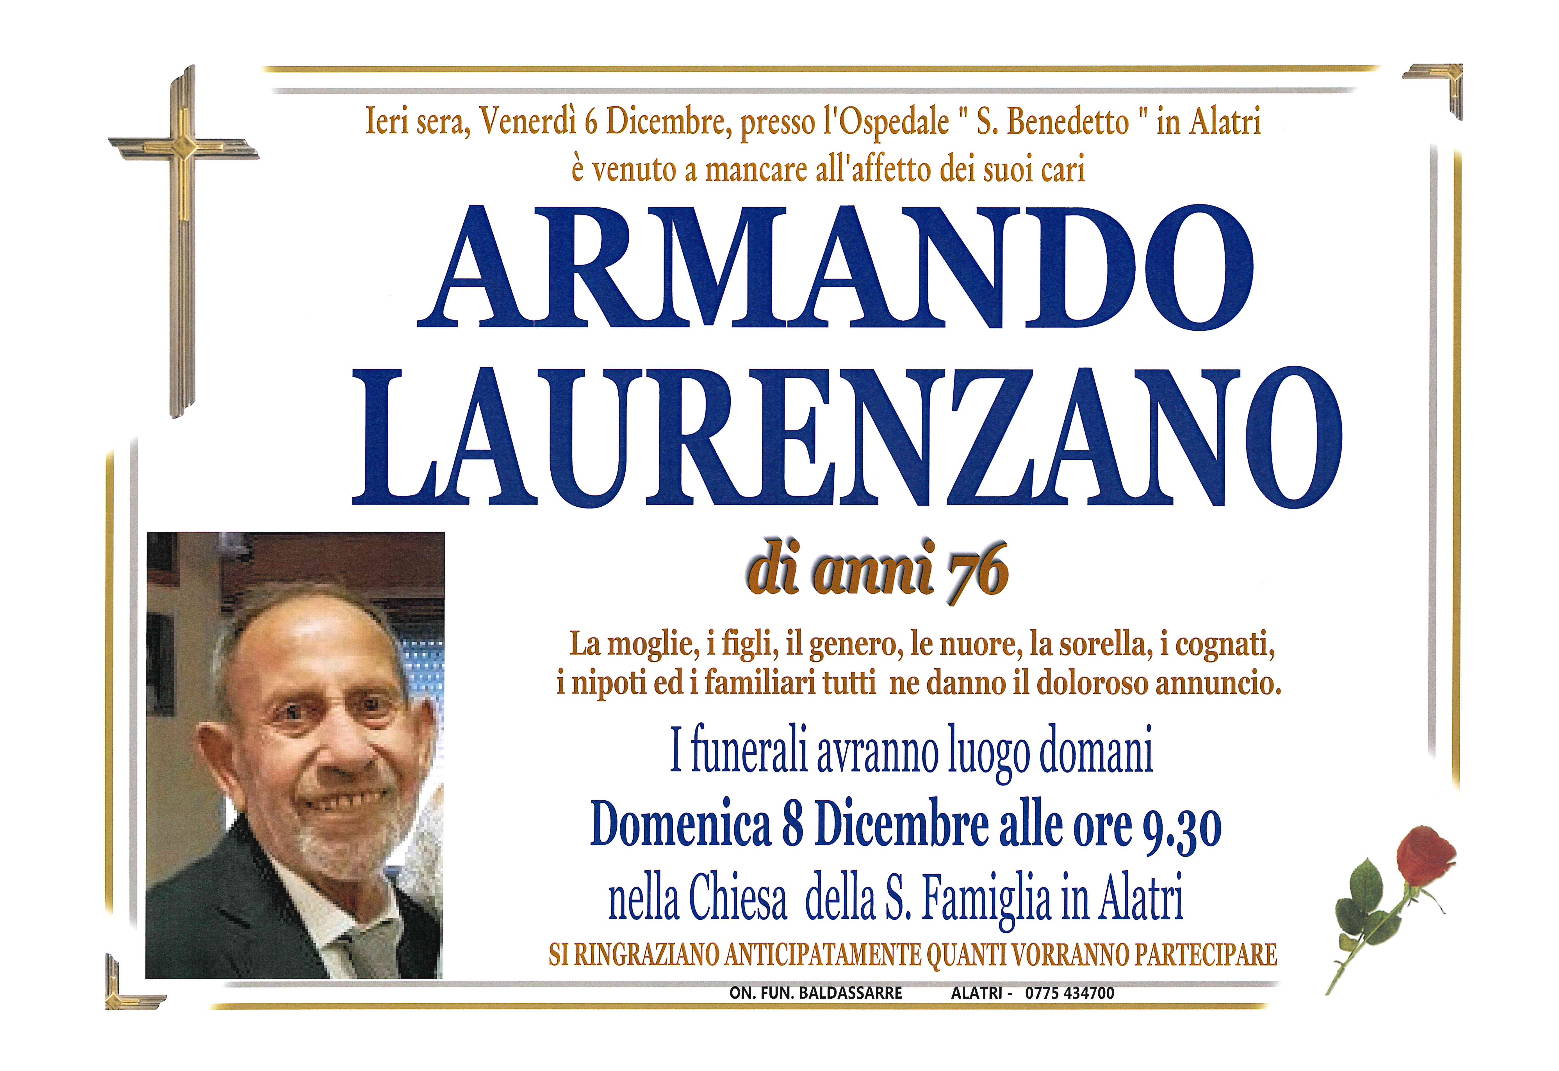 Armando Laurenzano